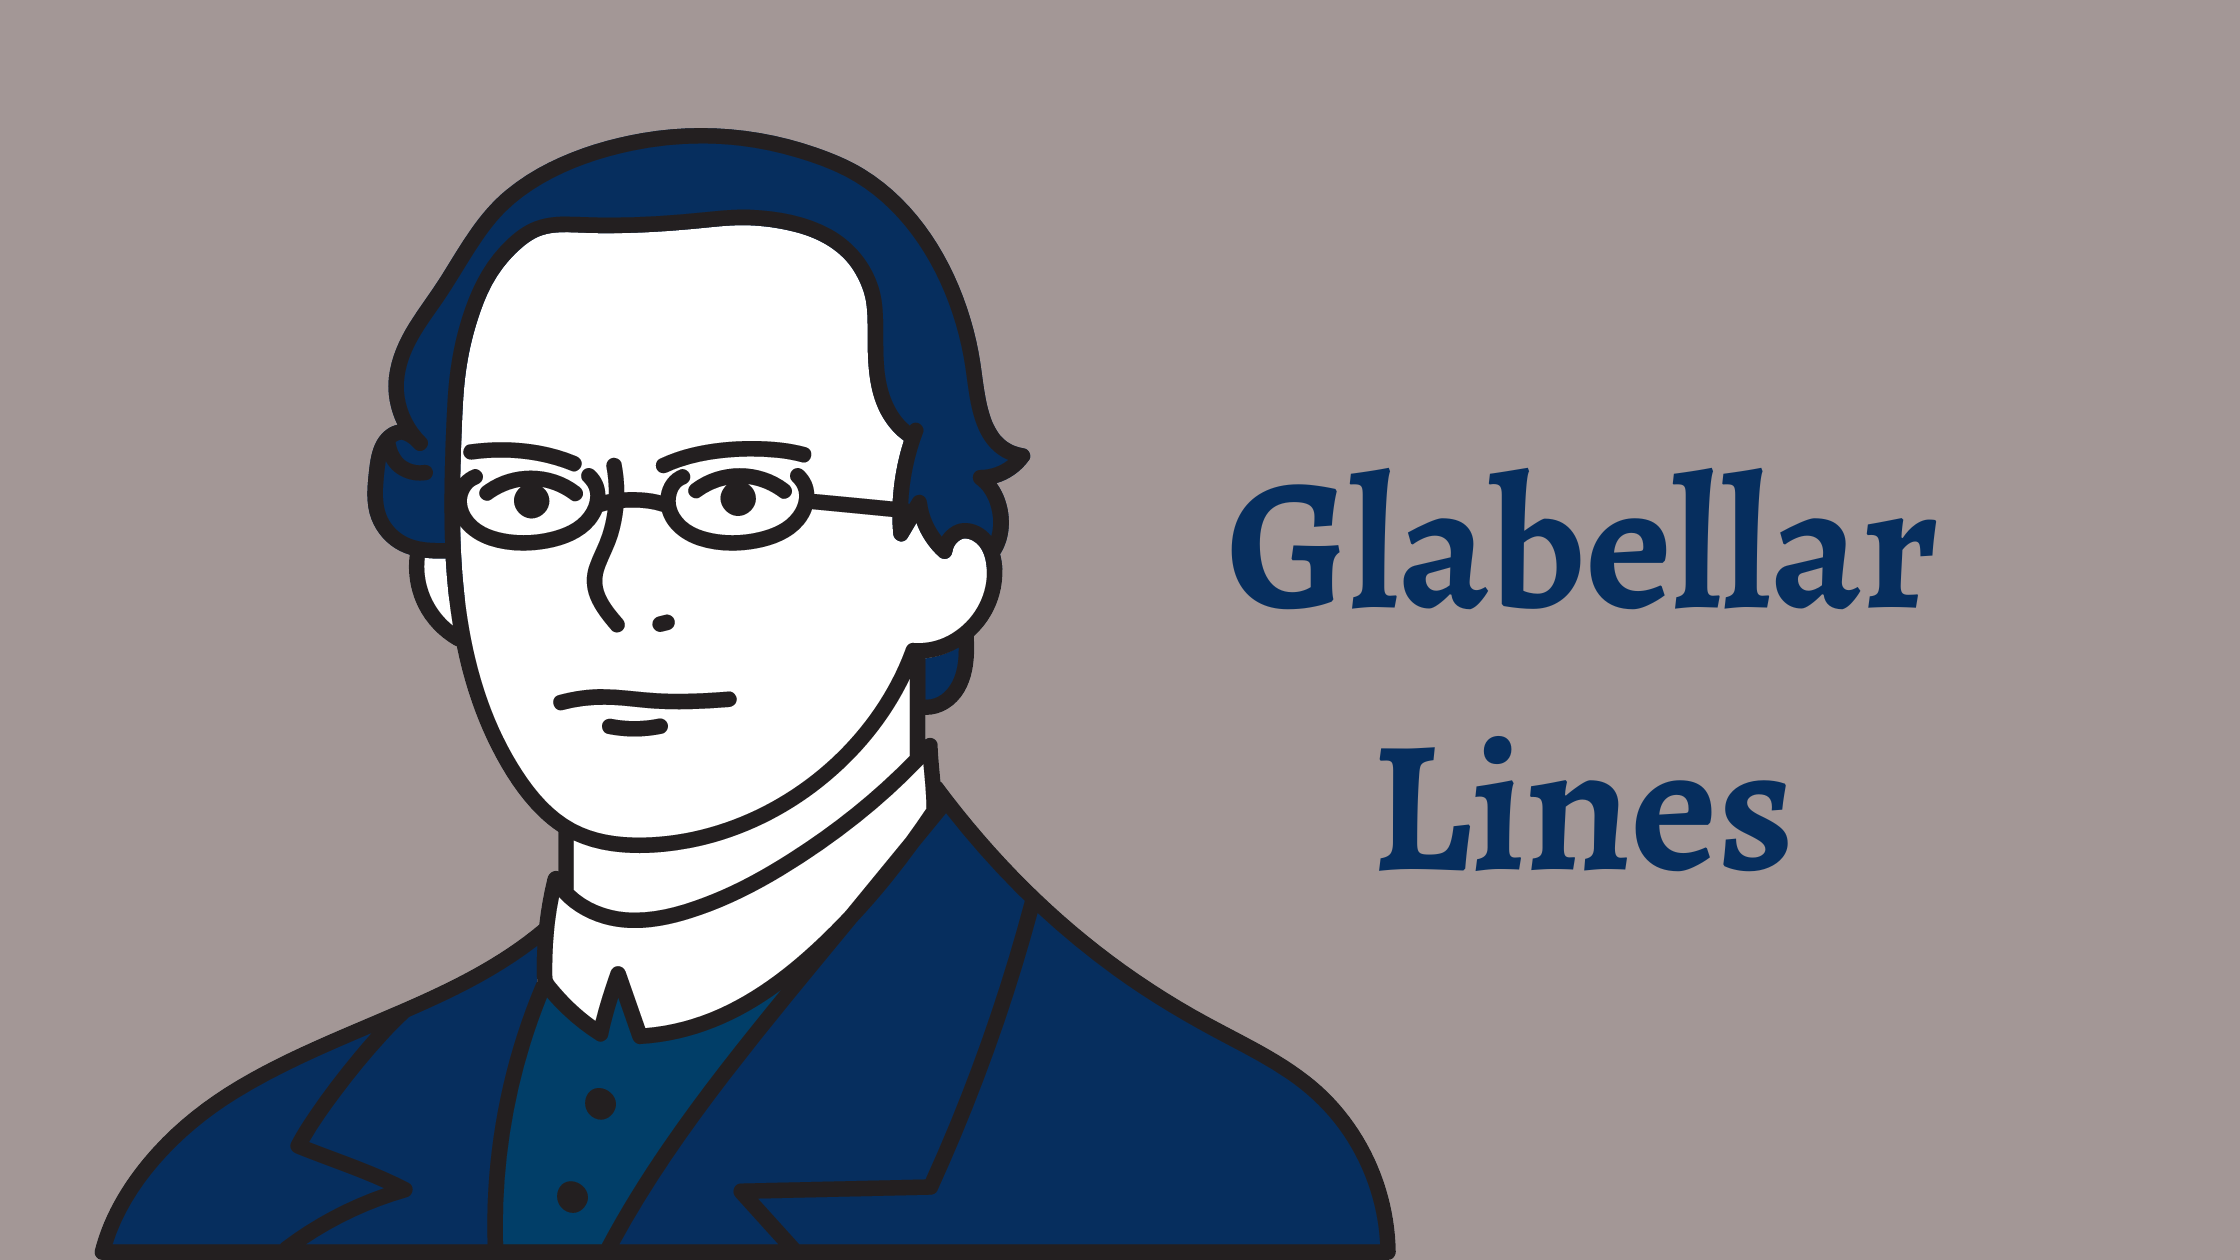 Glabellar lines